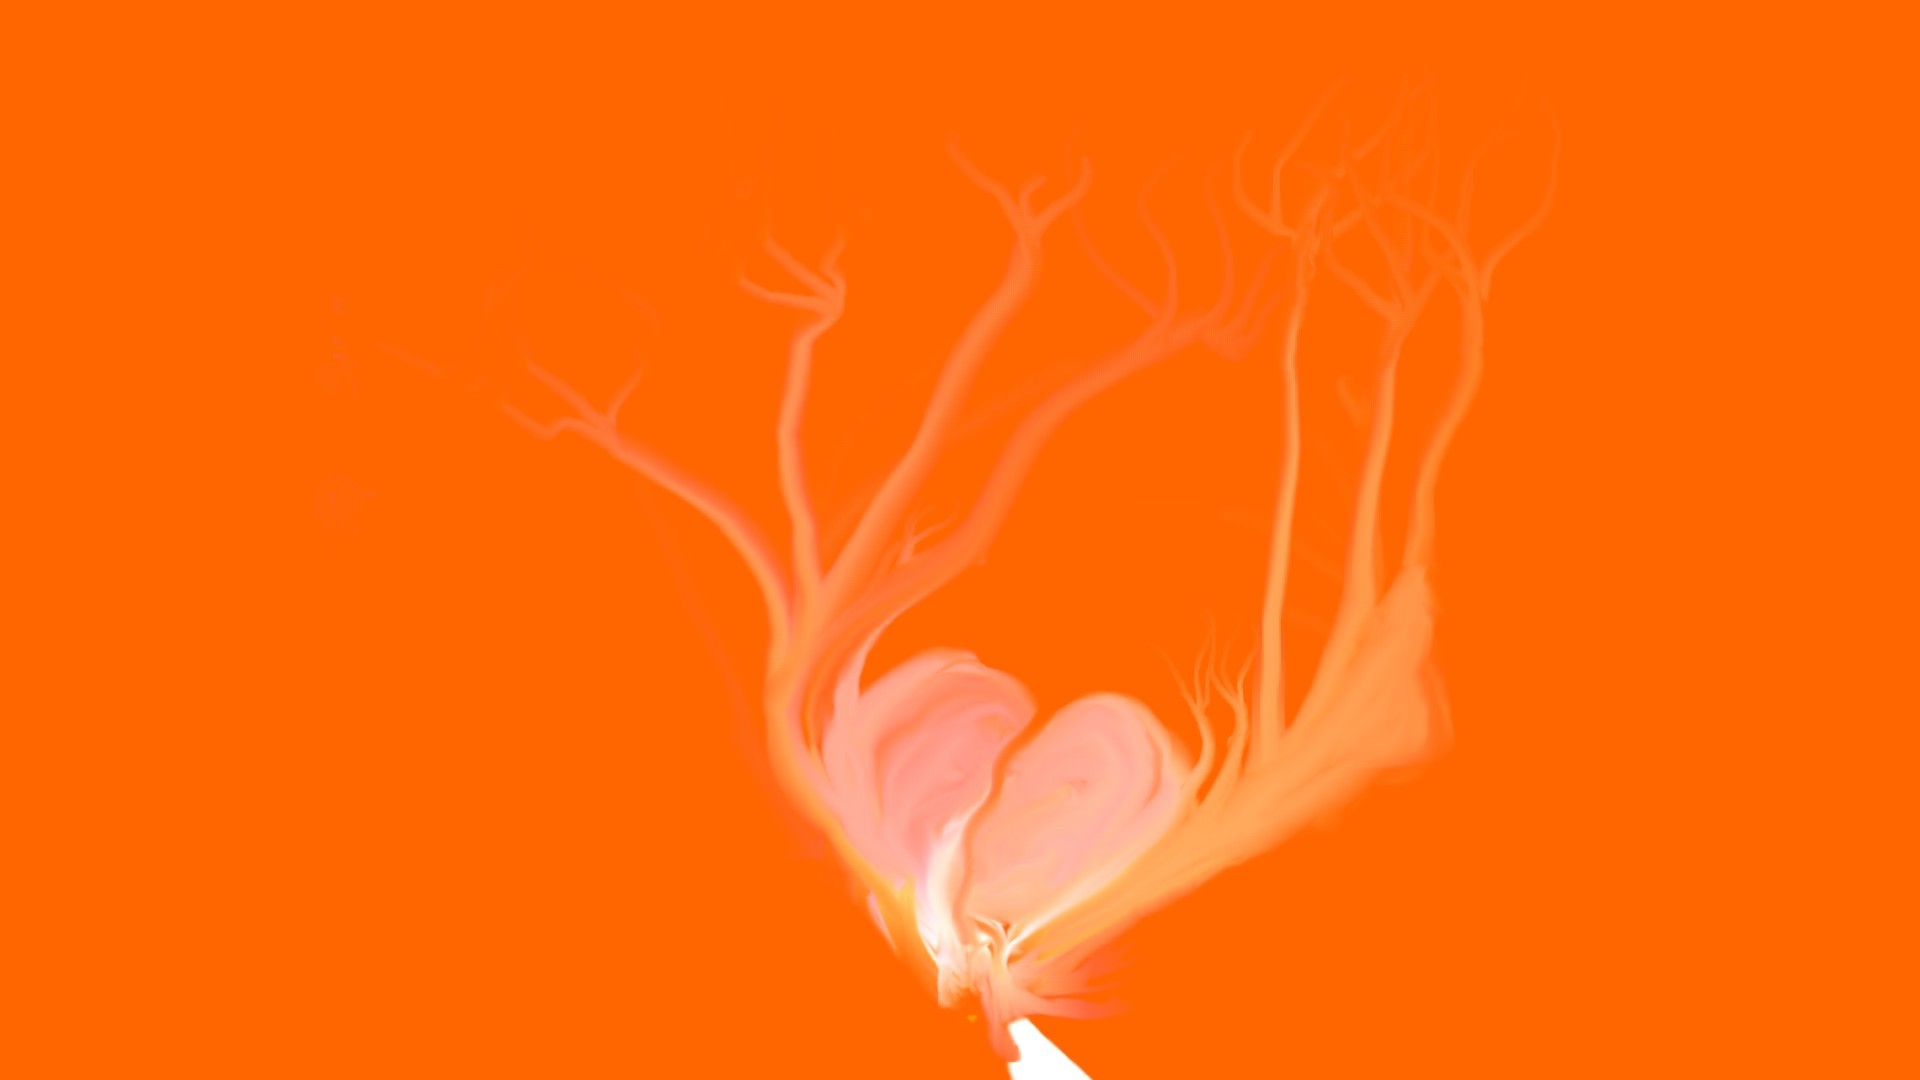 General 1920x1080 orange background minimalism fire simple background artwork heart (design)